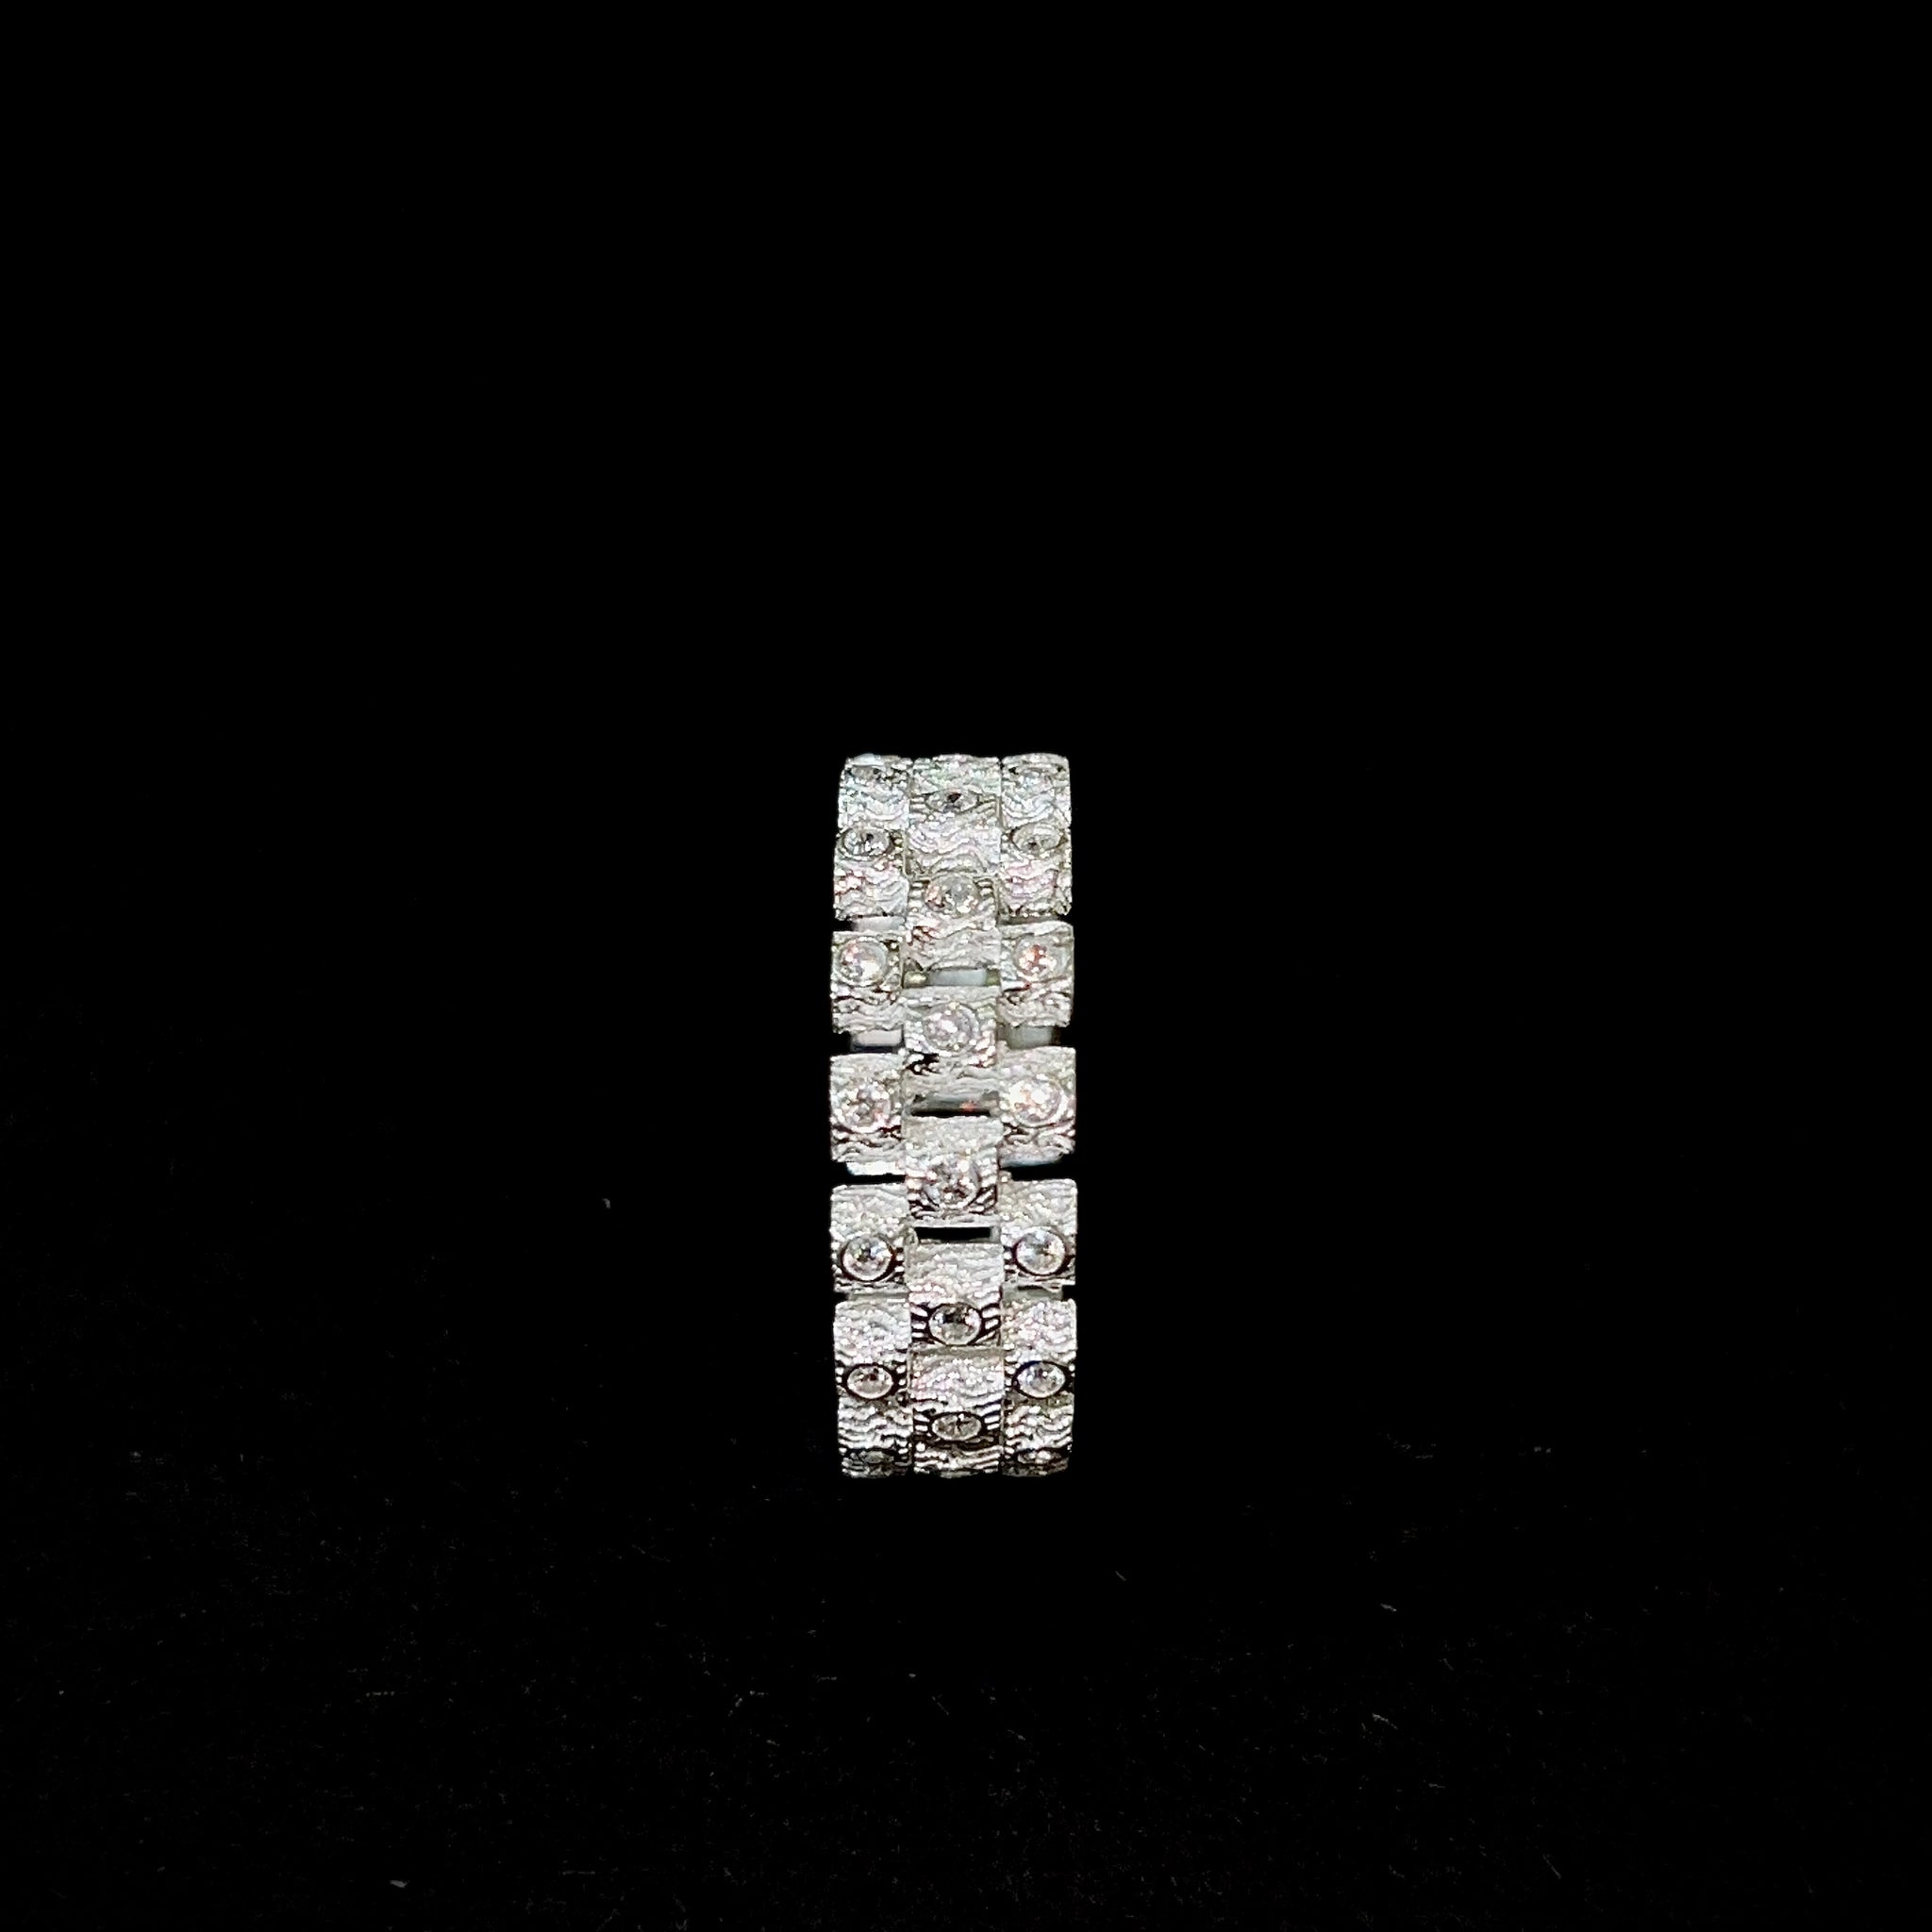 Icy Rolex-Link Ring - Silver 925 - Zirkonia stones